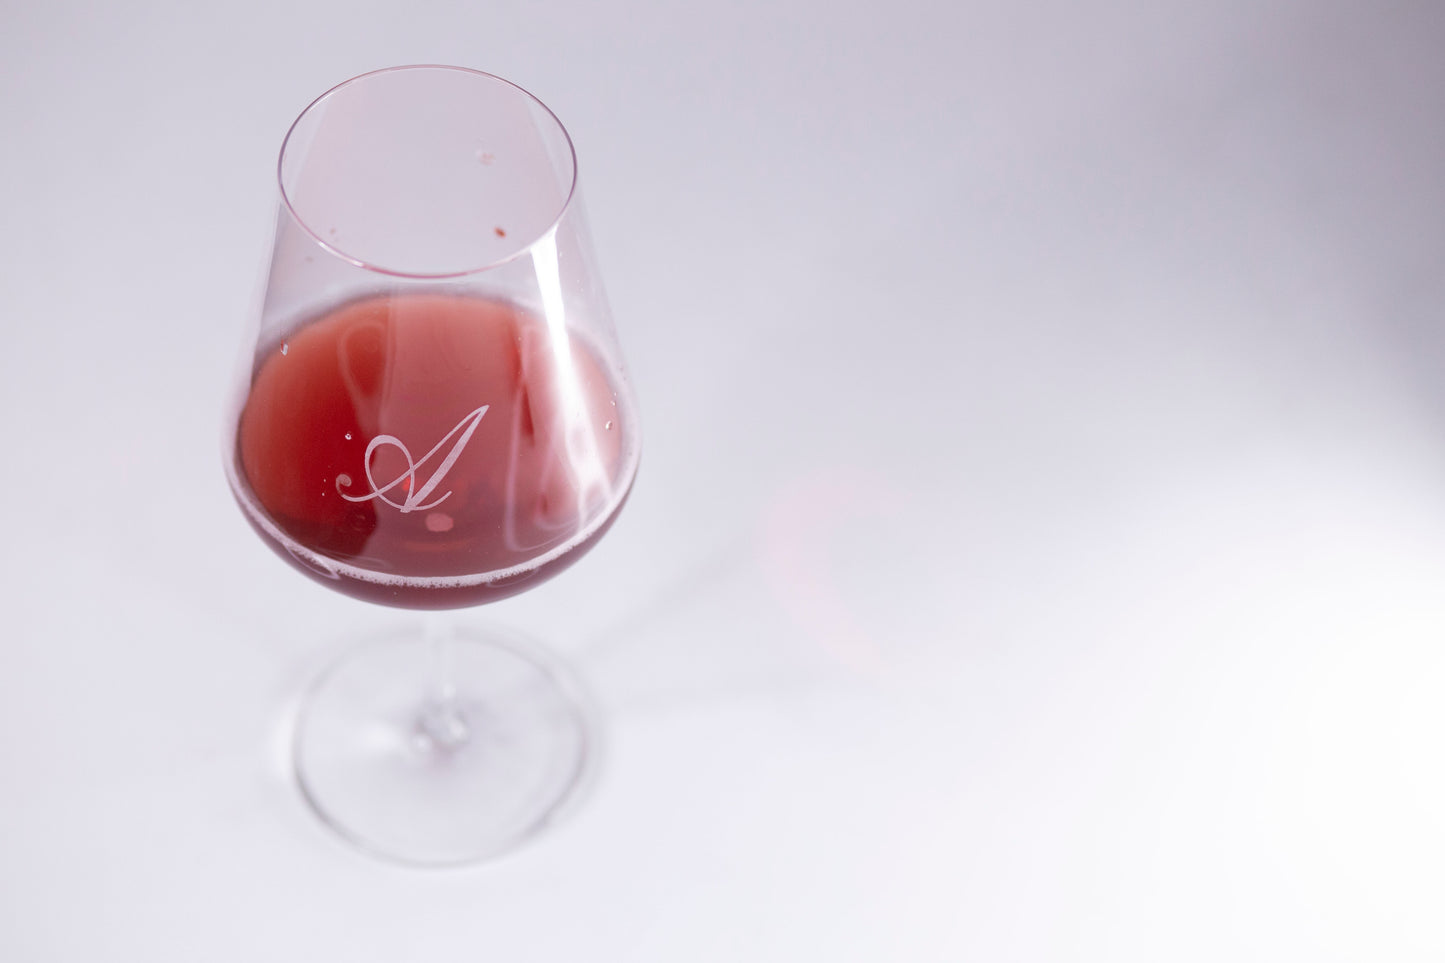 Fine Glass - Burgundy Bordeaux Glass